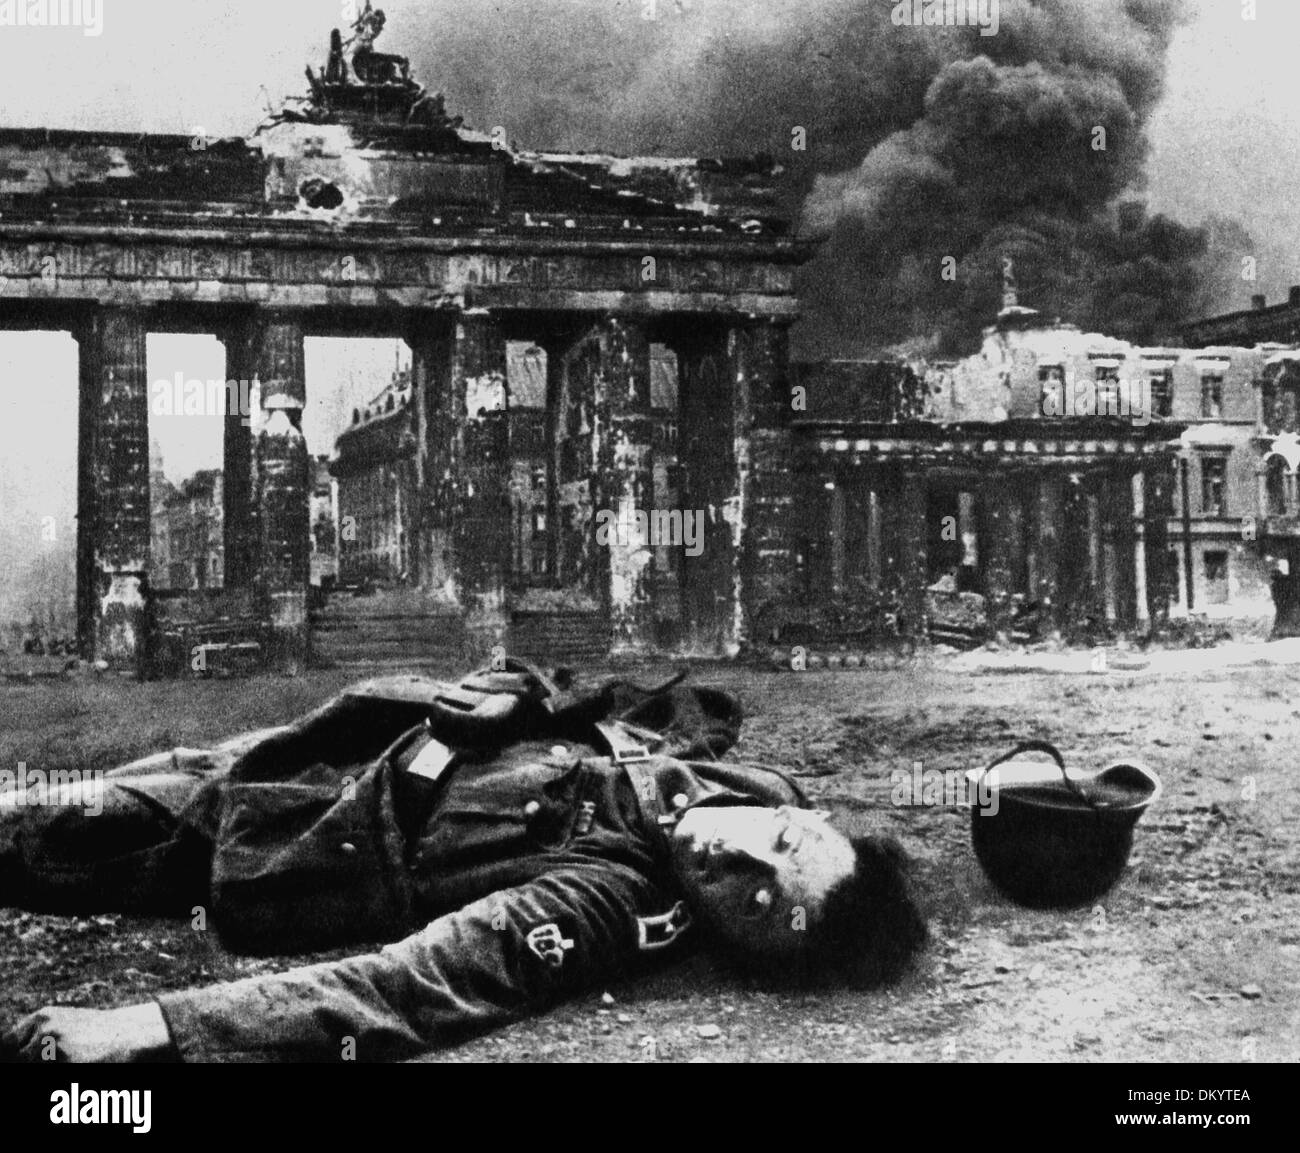 A dead soldier of the German Wehrmacht is pictured in front of the Brandenburg Gate in Berlin, Germany, in April/May 1945. Fotoarchiv für Zeitgeschichte Stock Photo